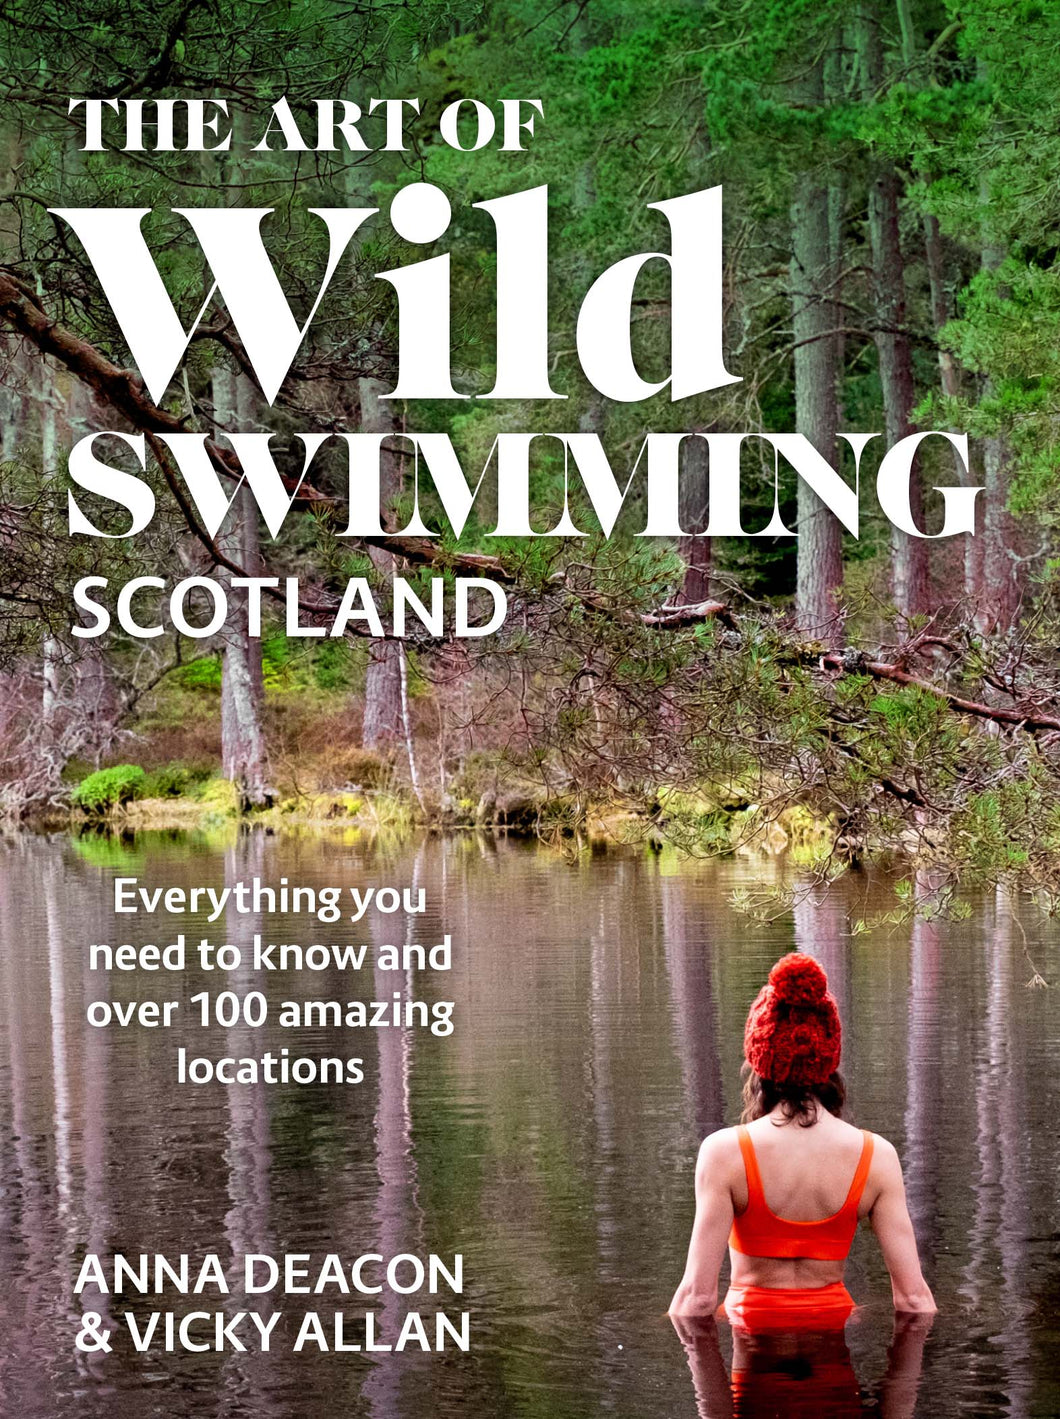 Art of Wild Swimming Scotland by Anna Deacon & Vicky Allan